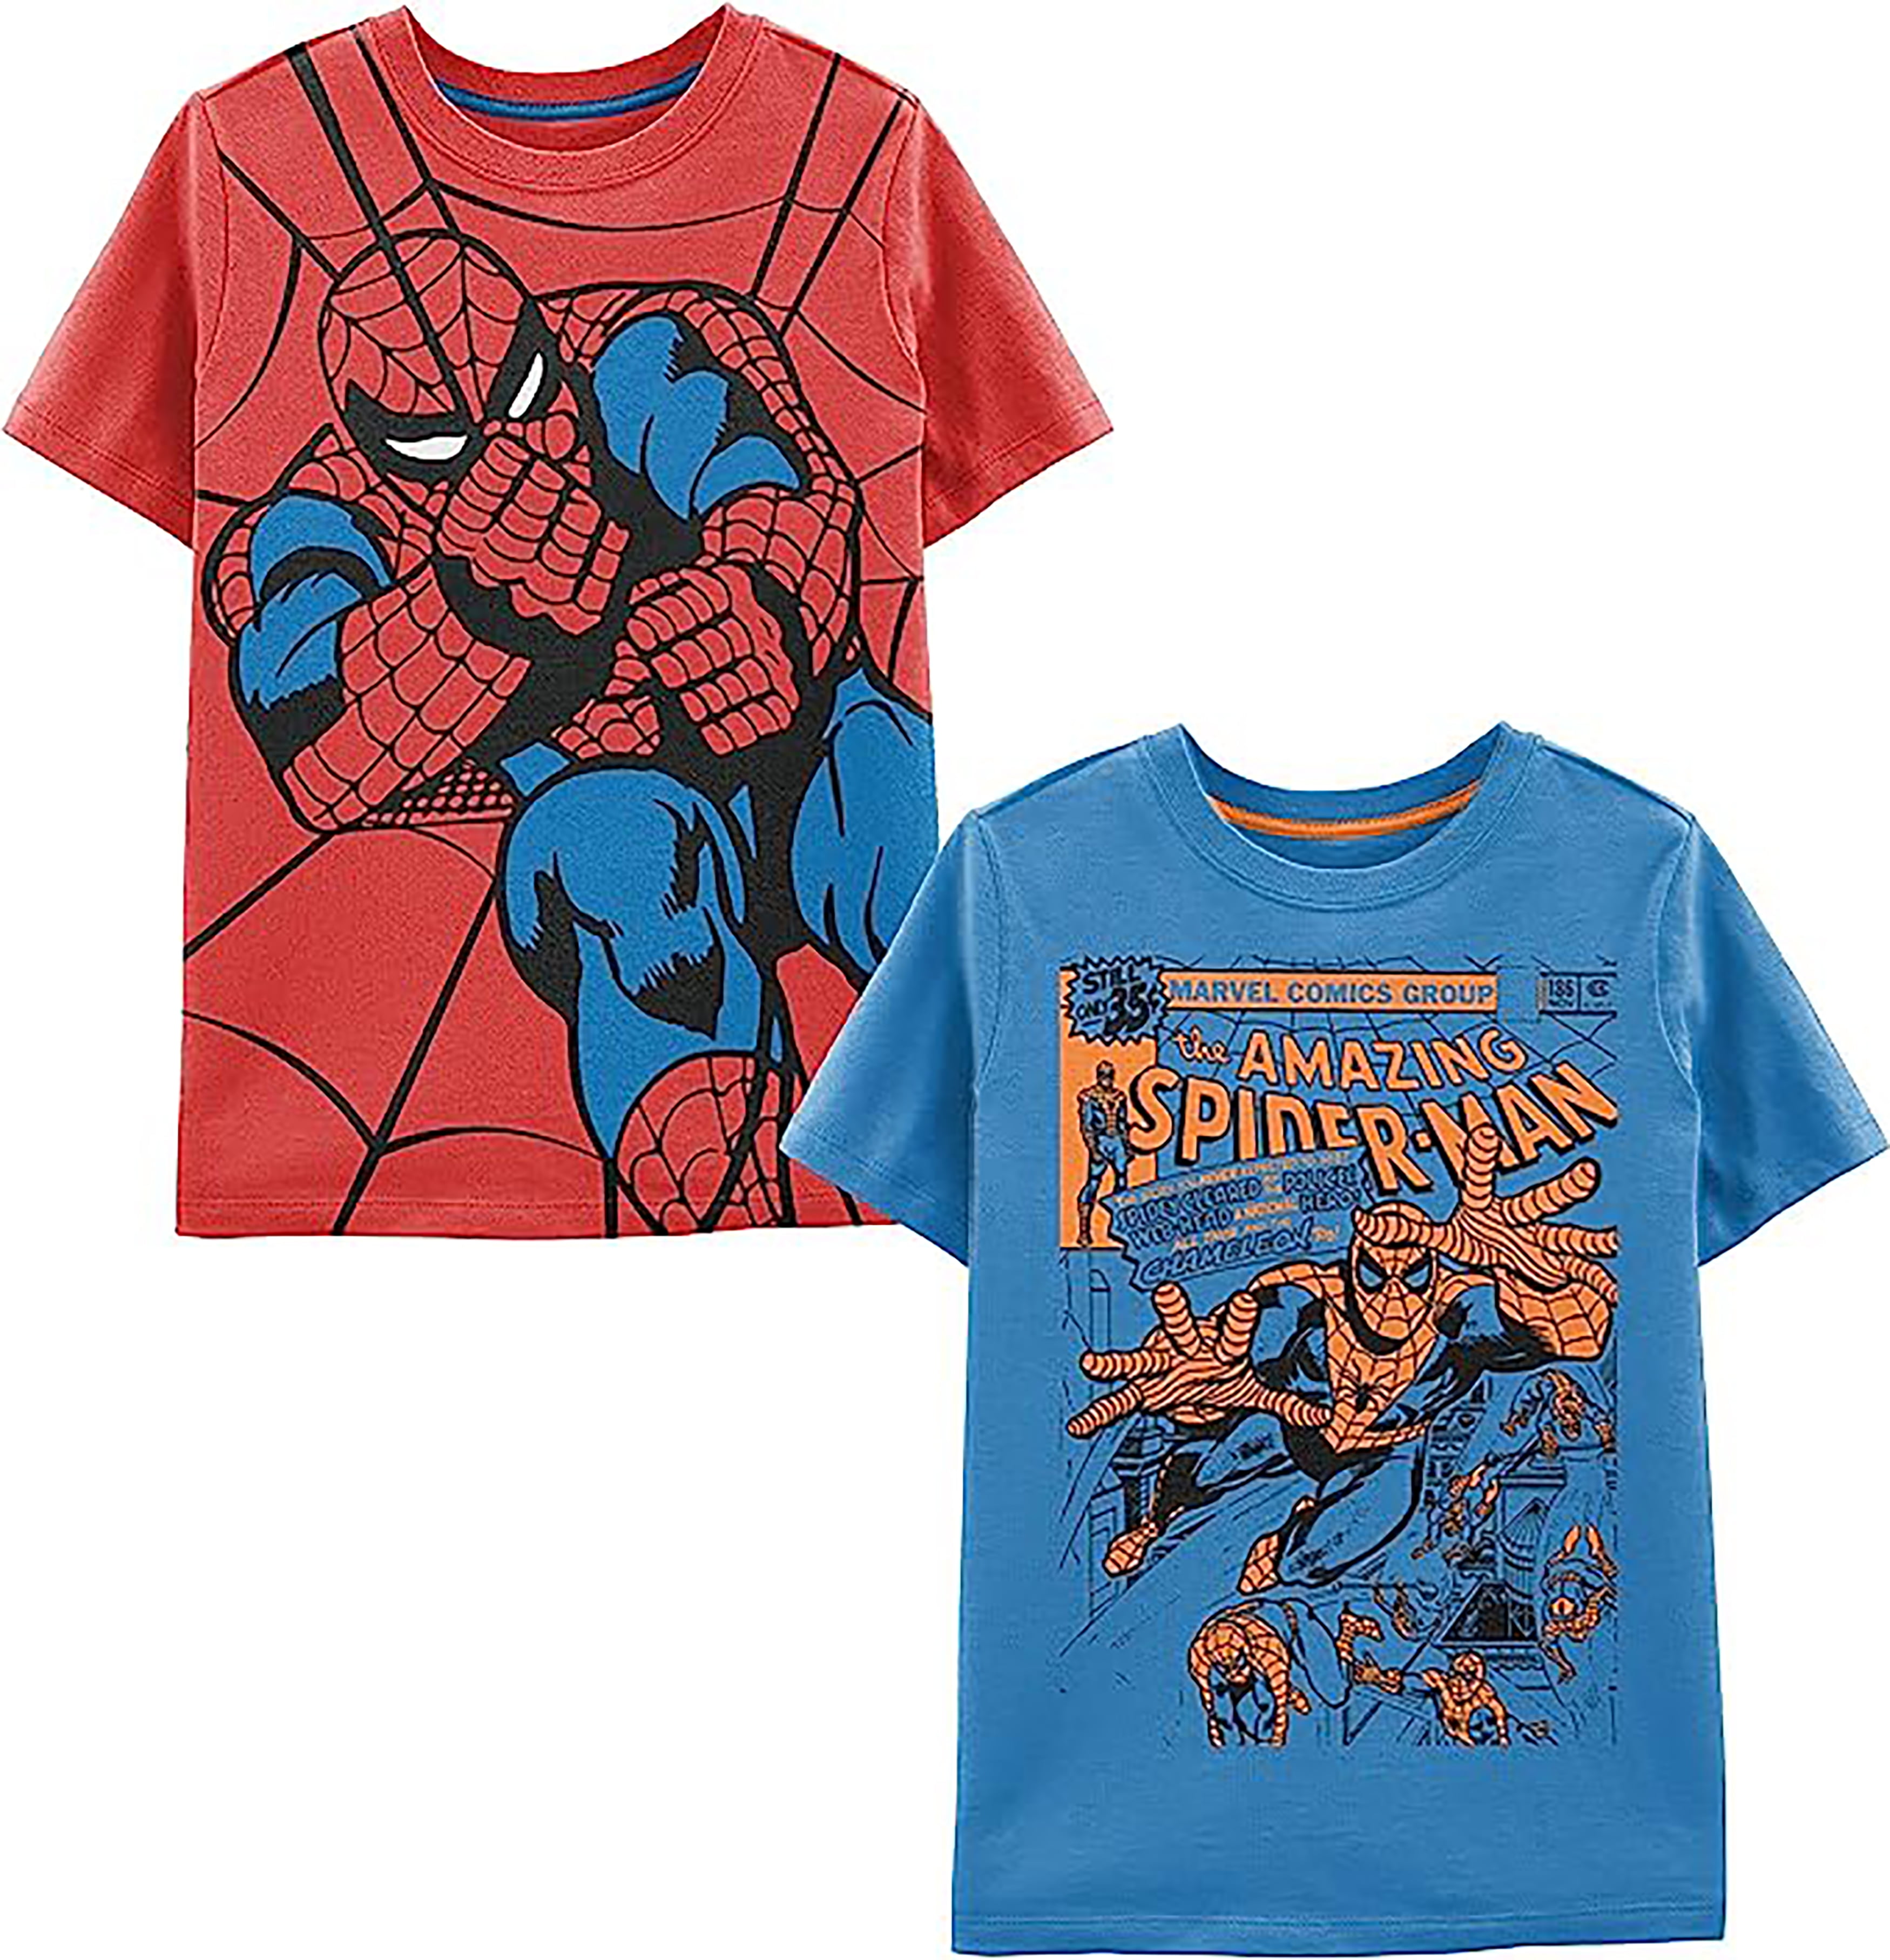 Marvel Superheroes Boys 2 Pack Short Sleeve T-Shirts, Avengers ...